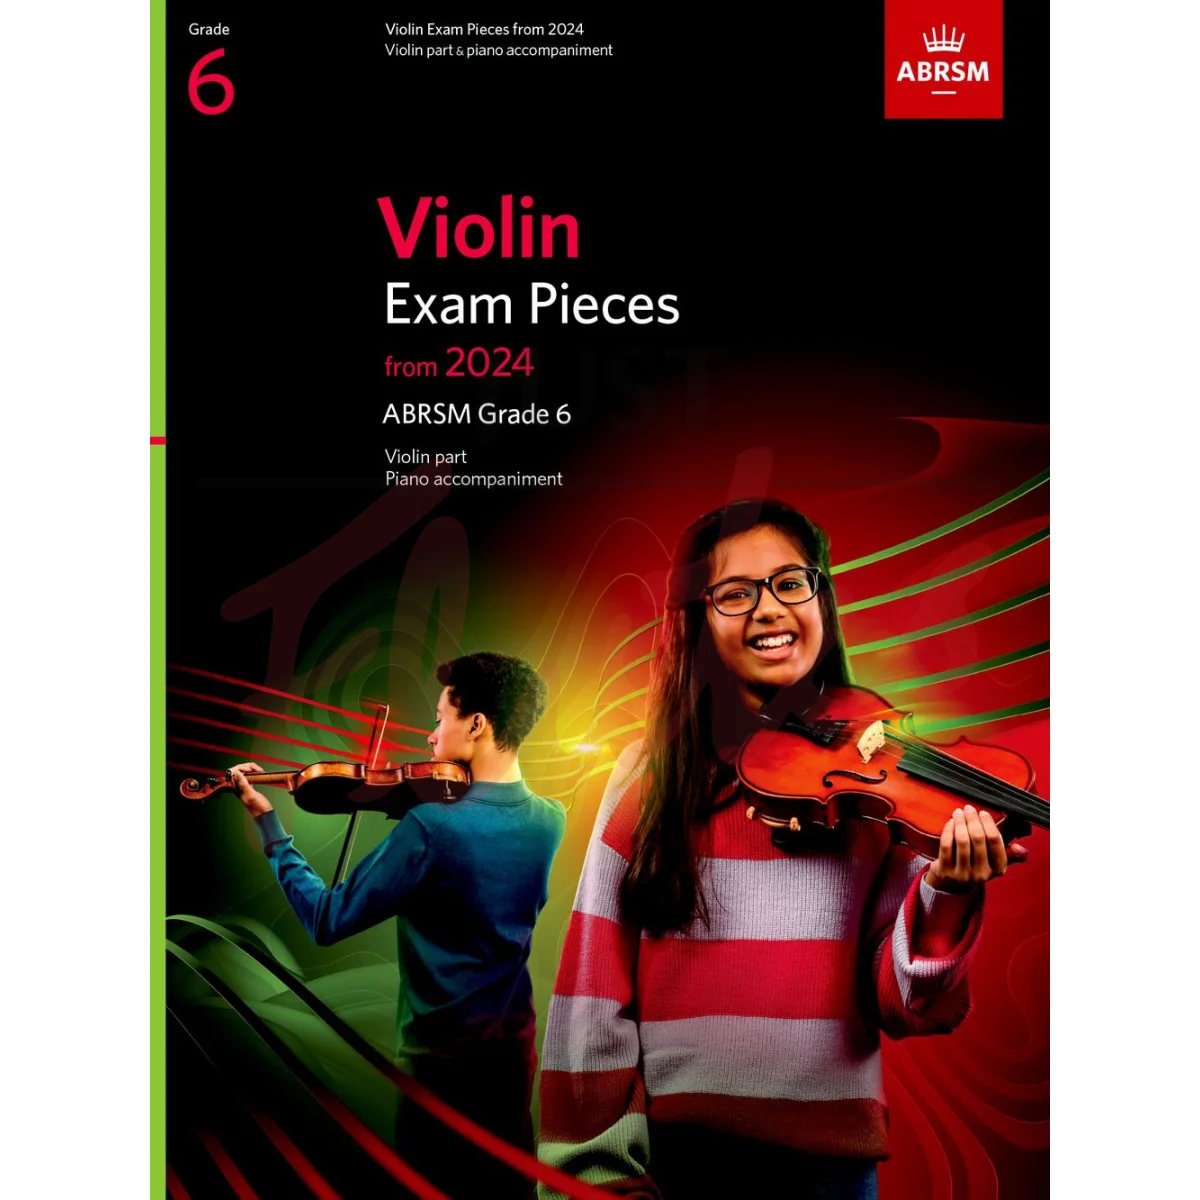 Violin Exam Pieces from 2024, Grade 6